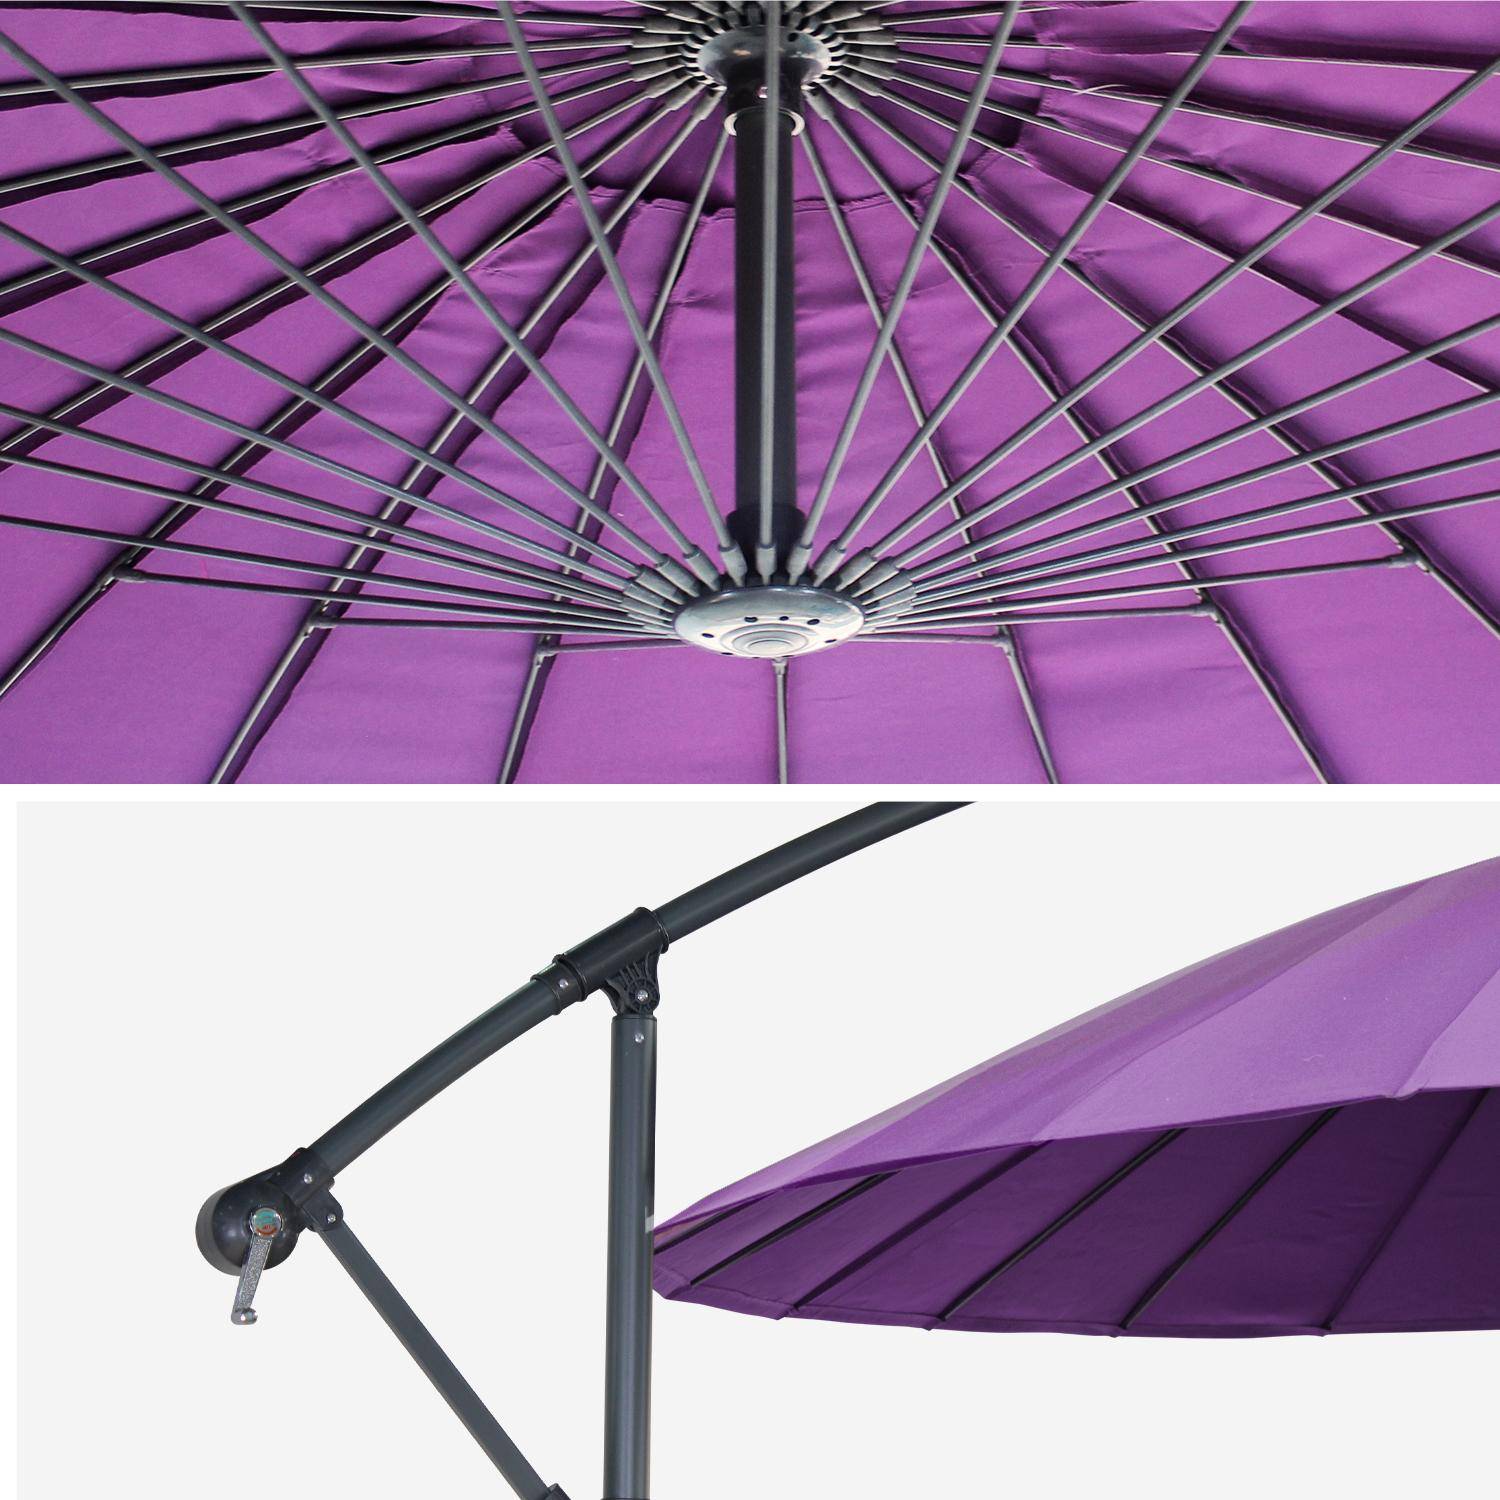 Sombrilla redonda 3m - Shanghai - Color violeta, estructura antracita, varillas de fibra de vidrio, manivela anti-retorno Photo3